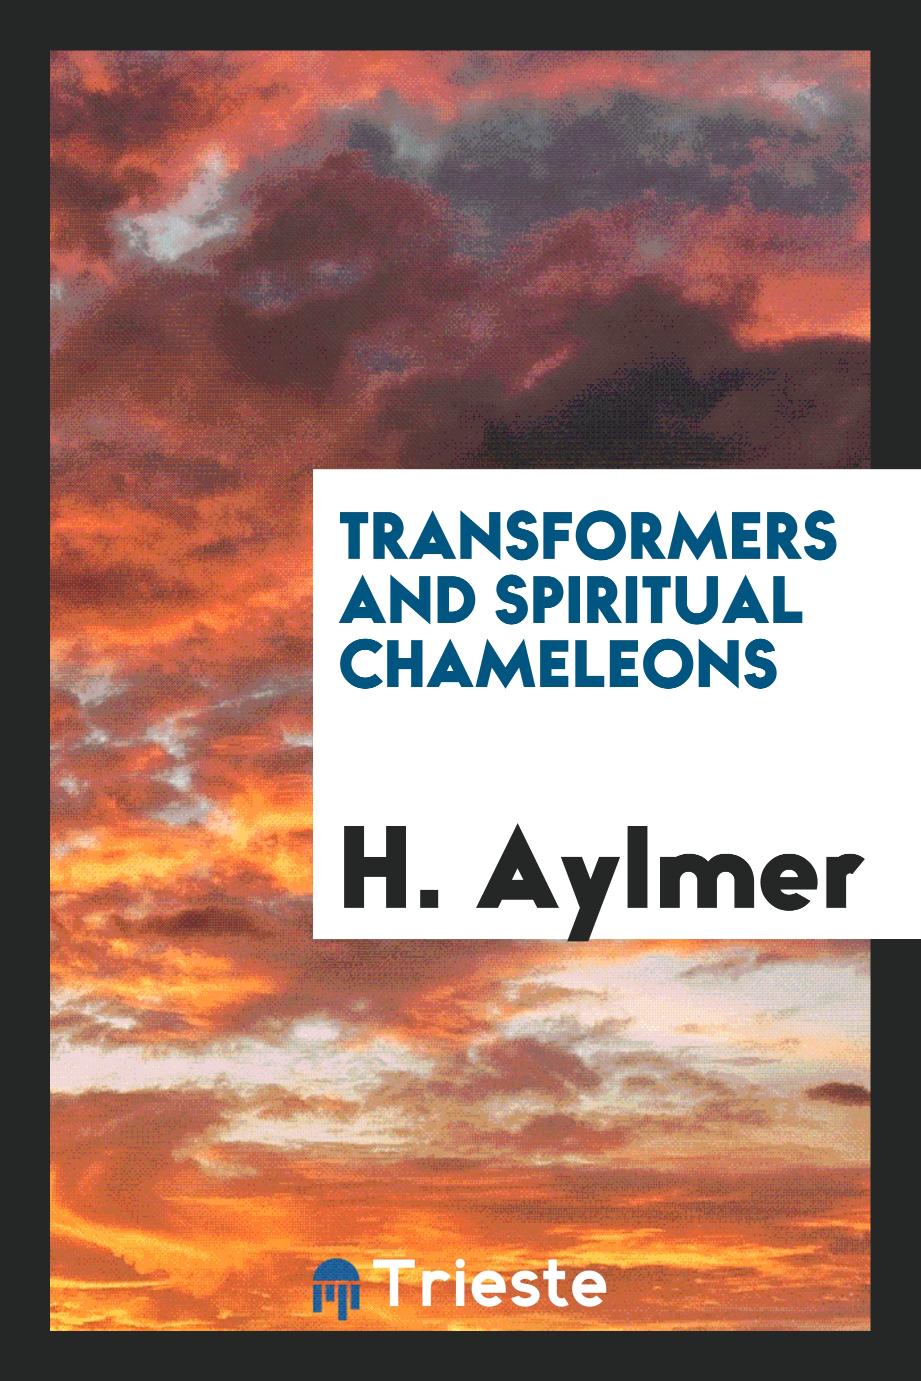 Transformers and spiritual chameleons